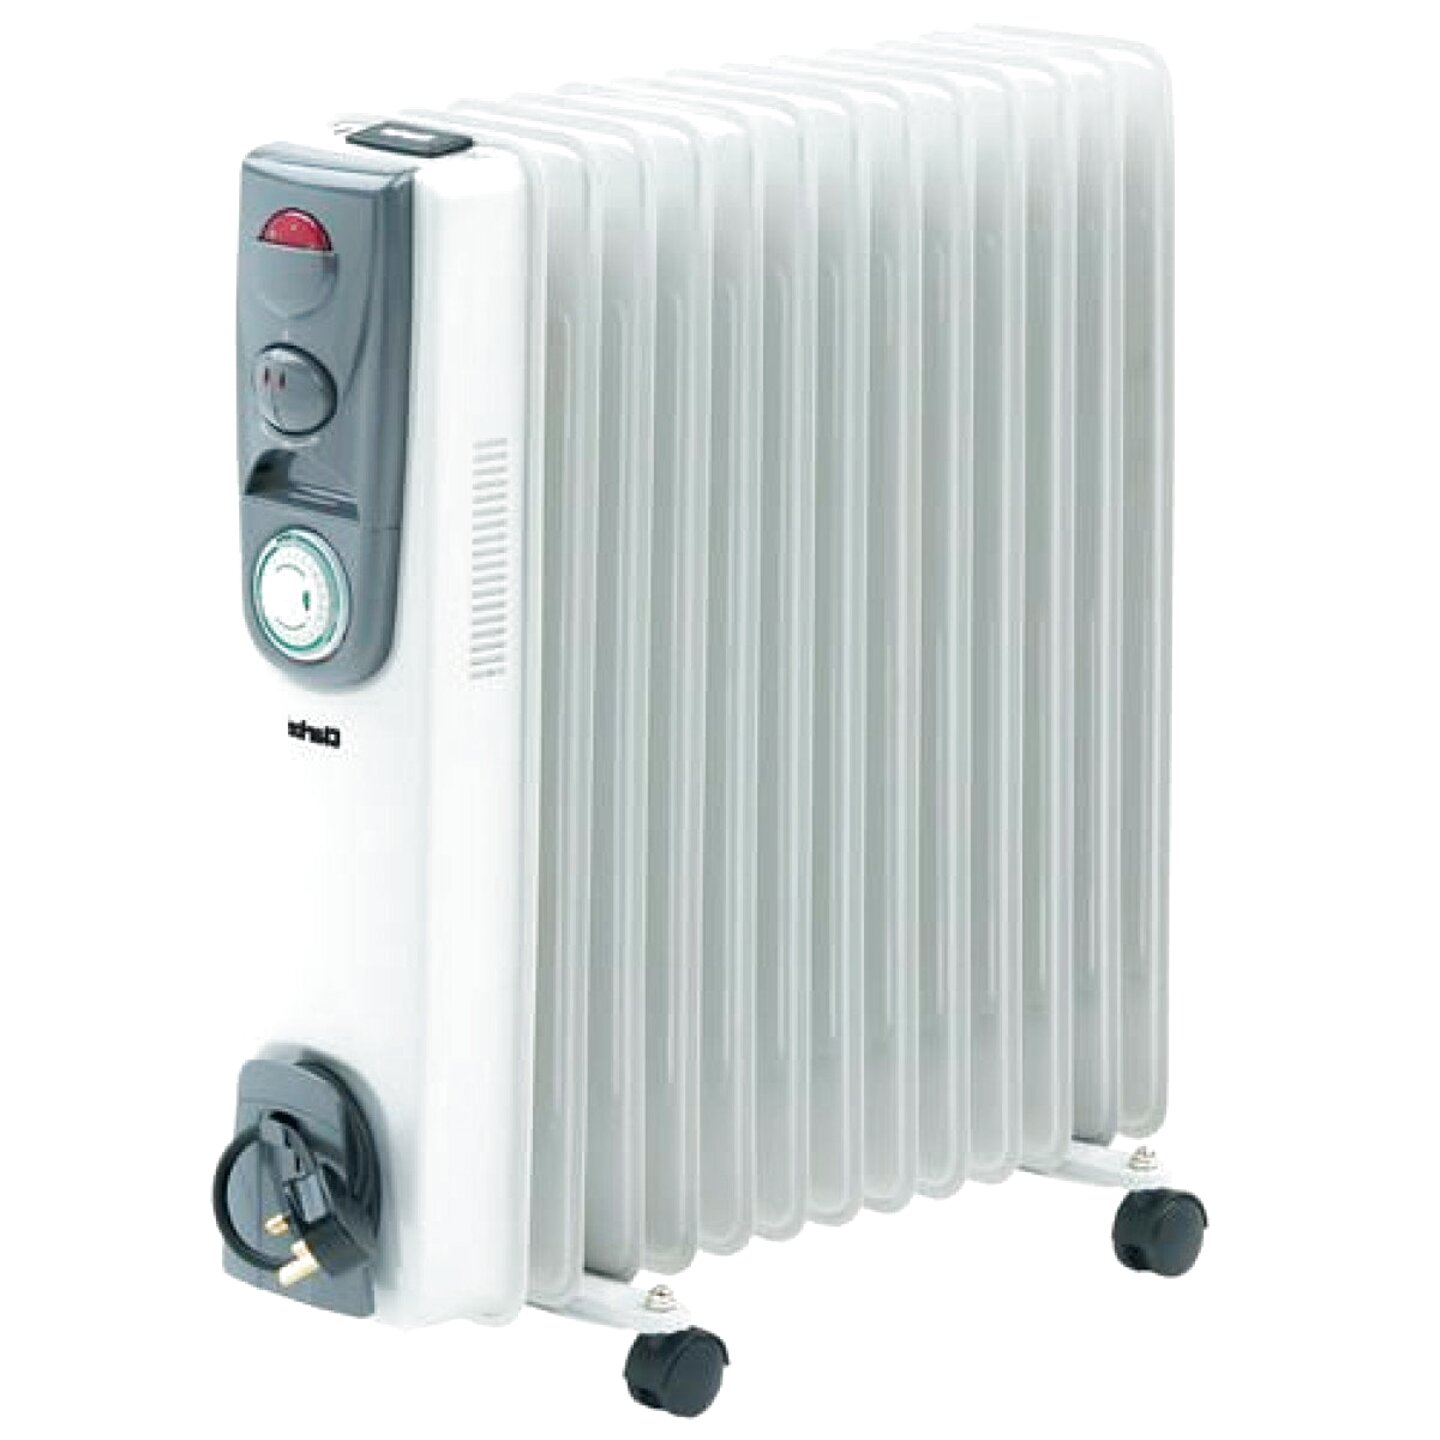 radiator sales uk